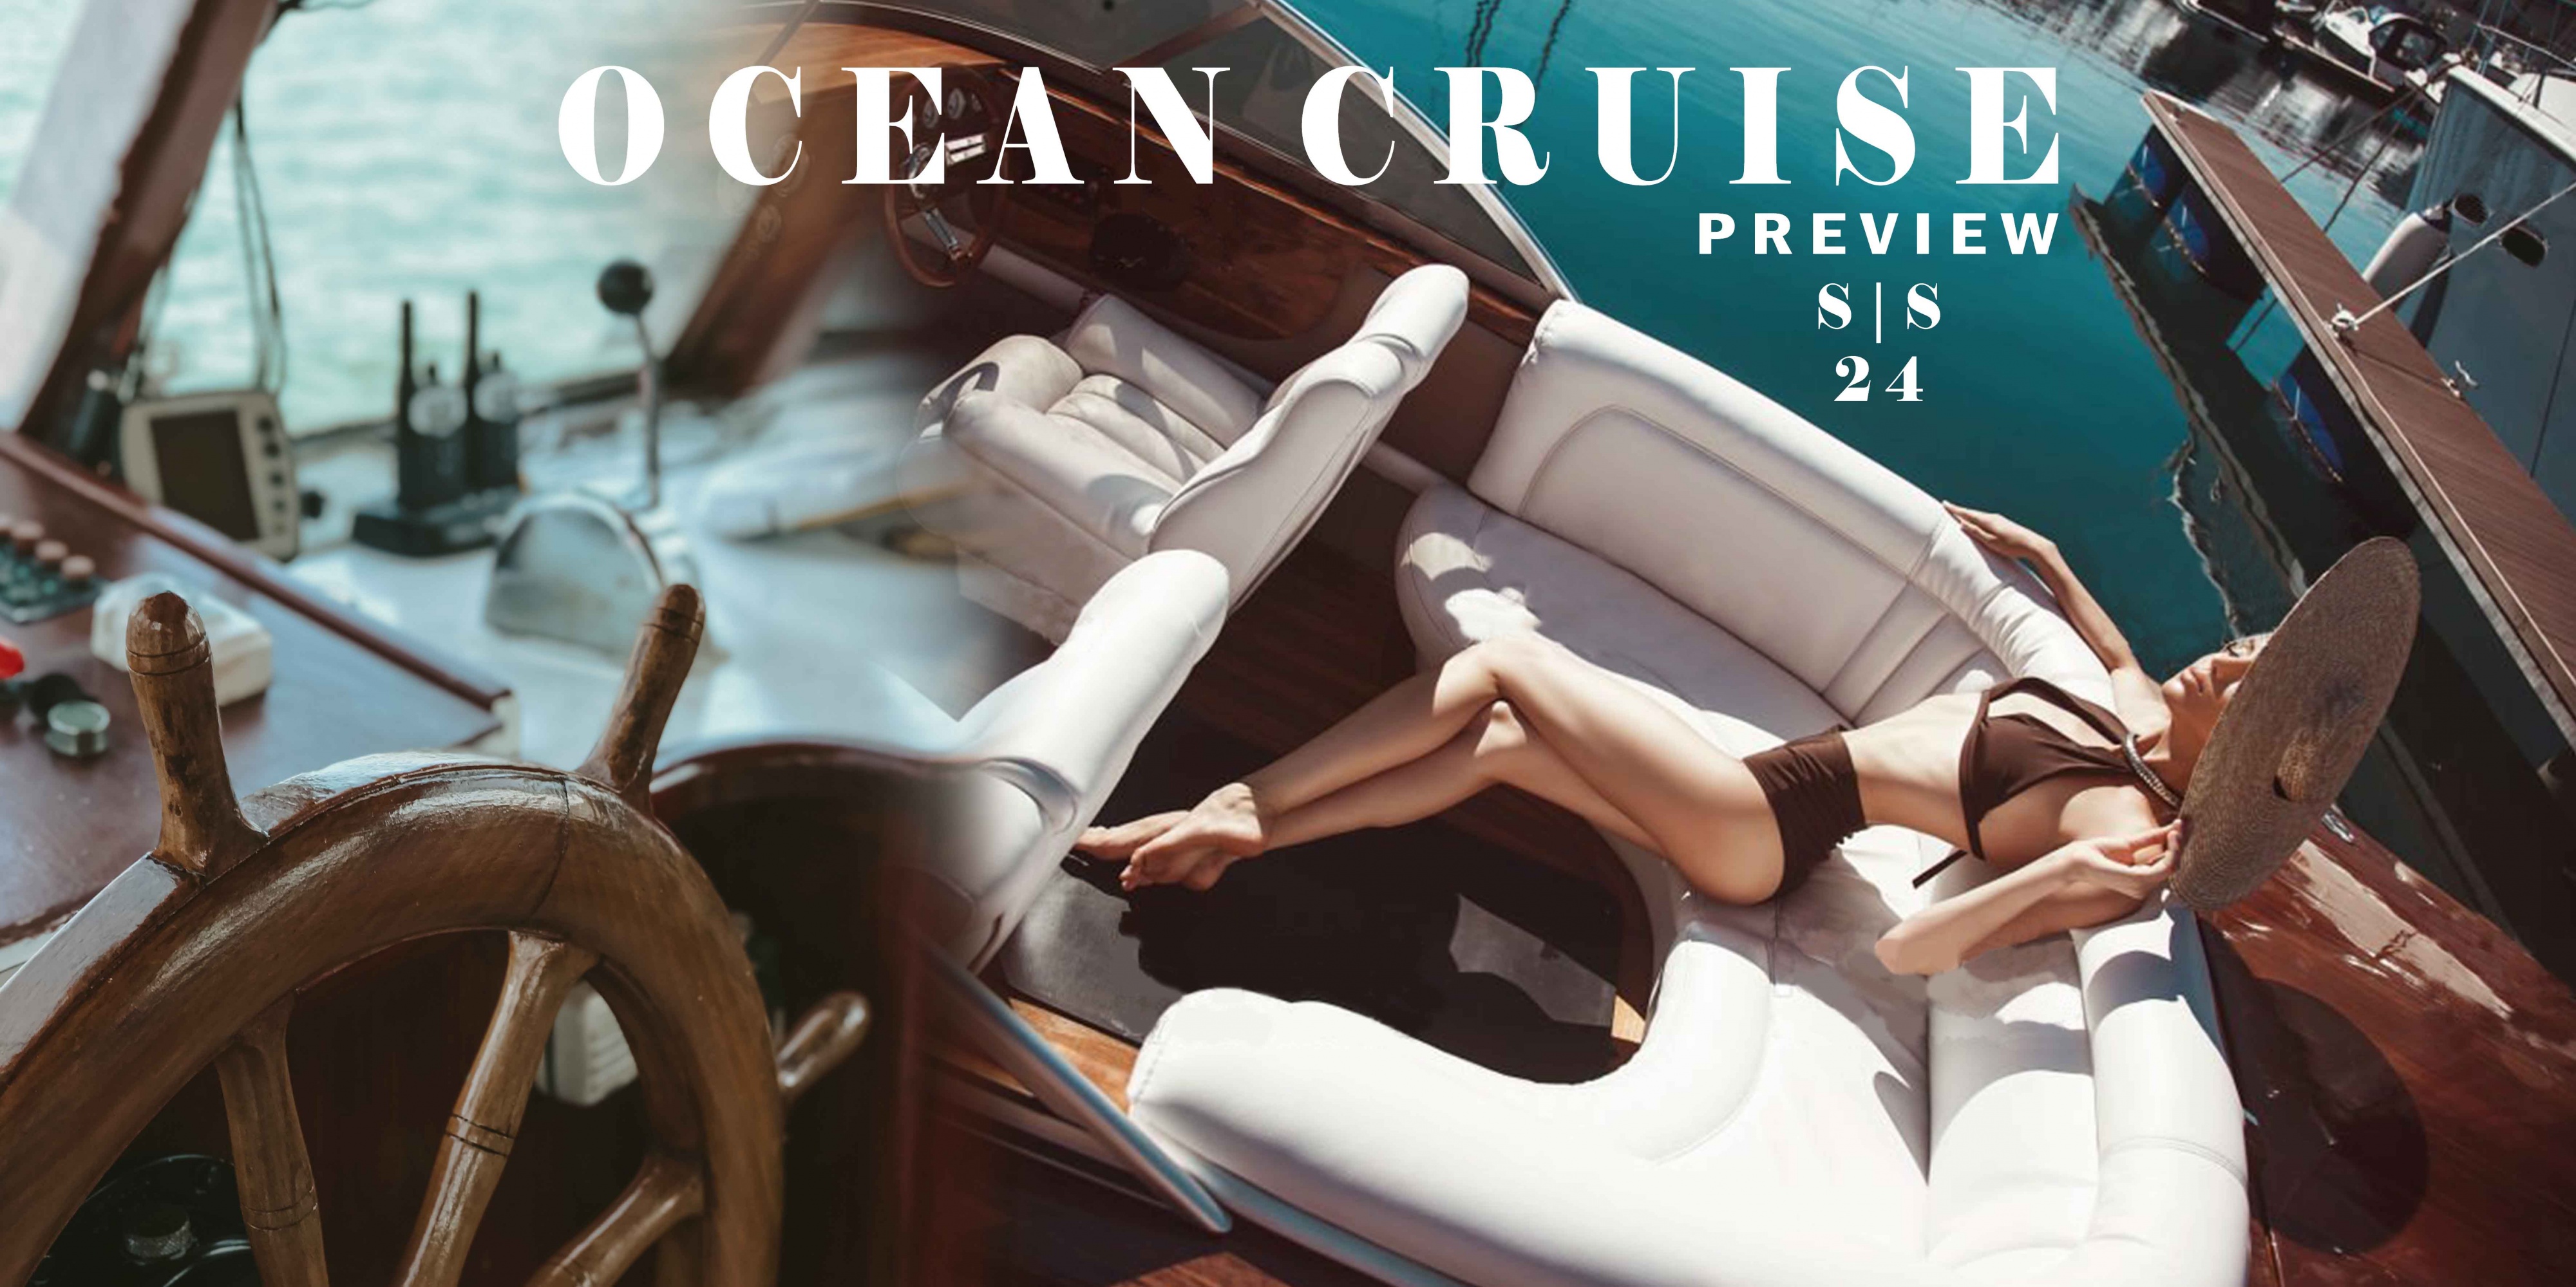 Ocean Cruise preview ss/24